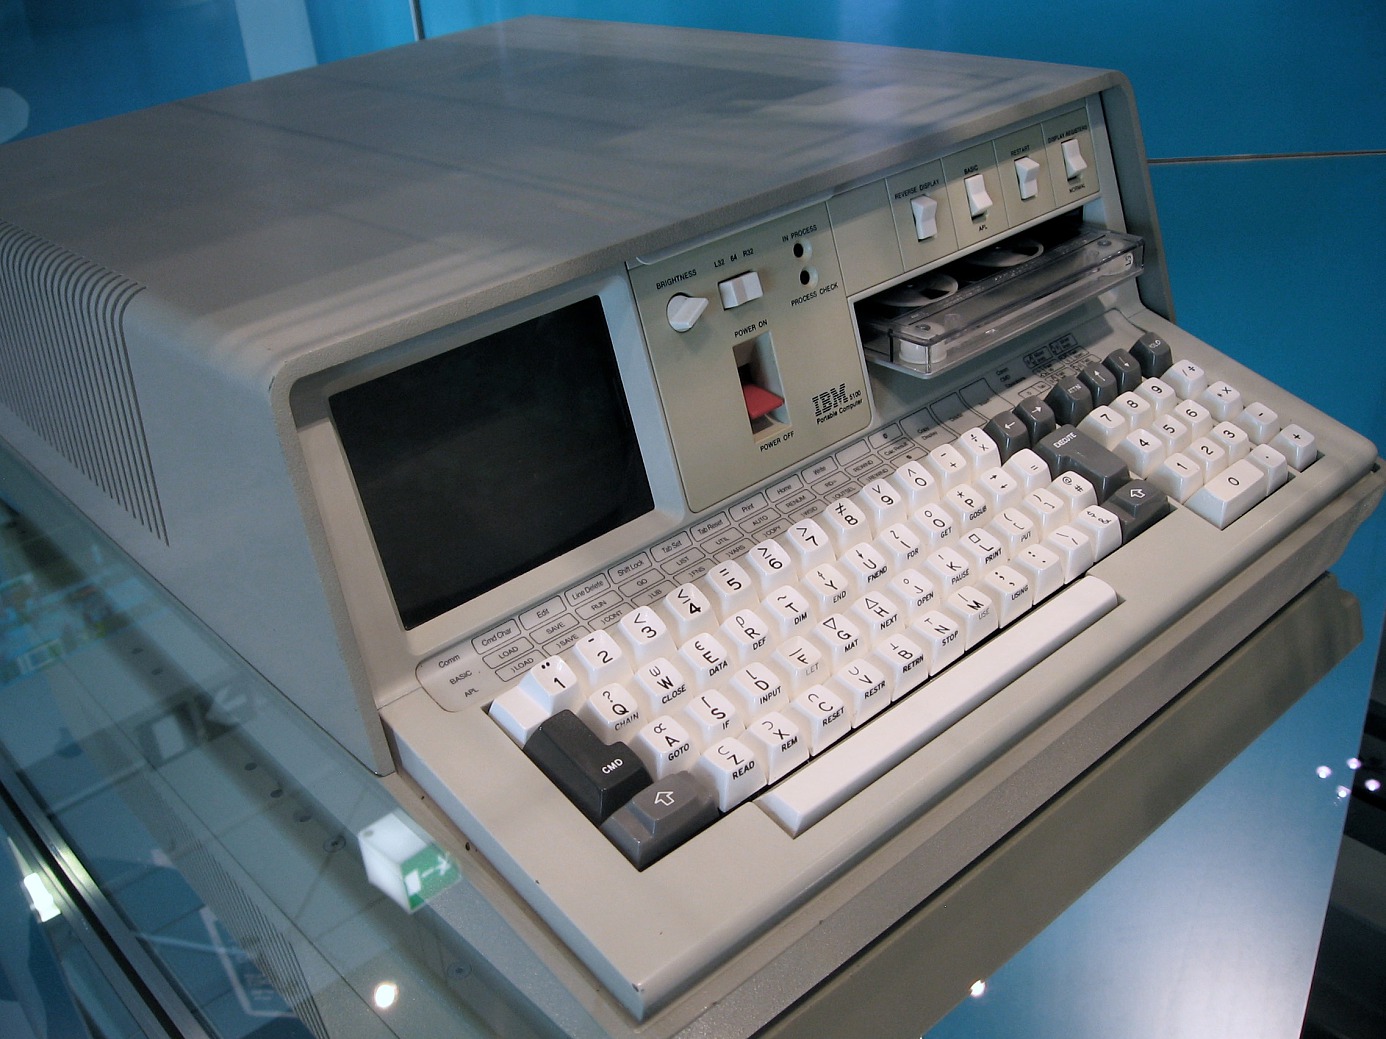 IBM 5100 keyboard 14510 s1386x1039